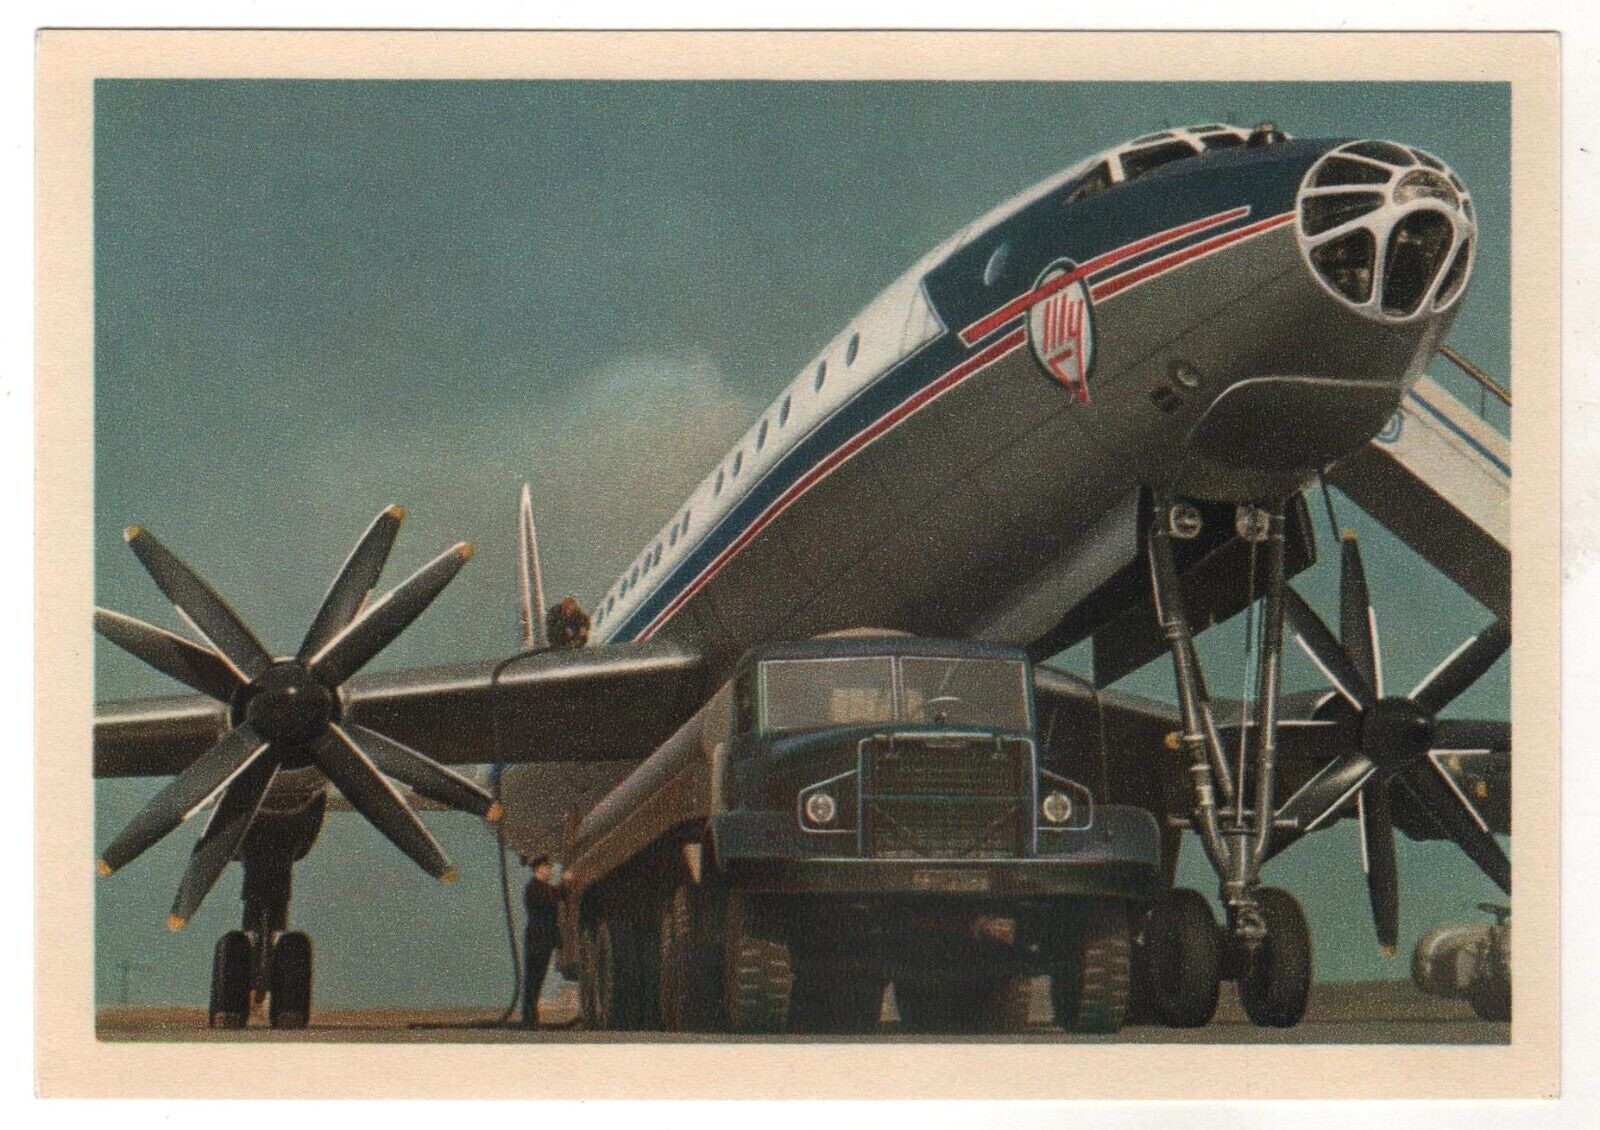 AEROFLOT Passenger aircraft TU-114 Airplane Aviation USSR Russian Postcard Old